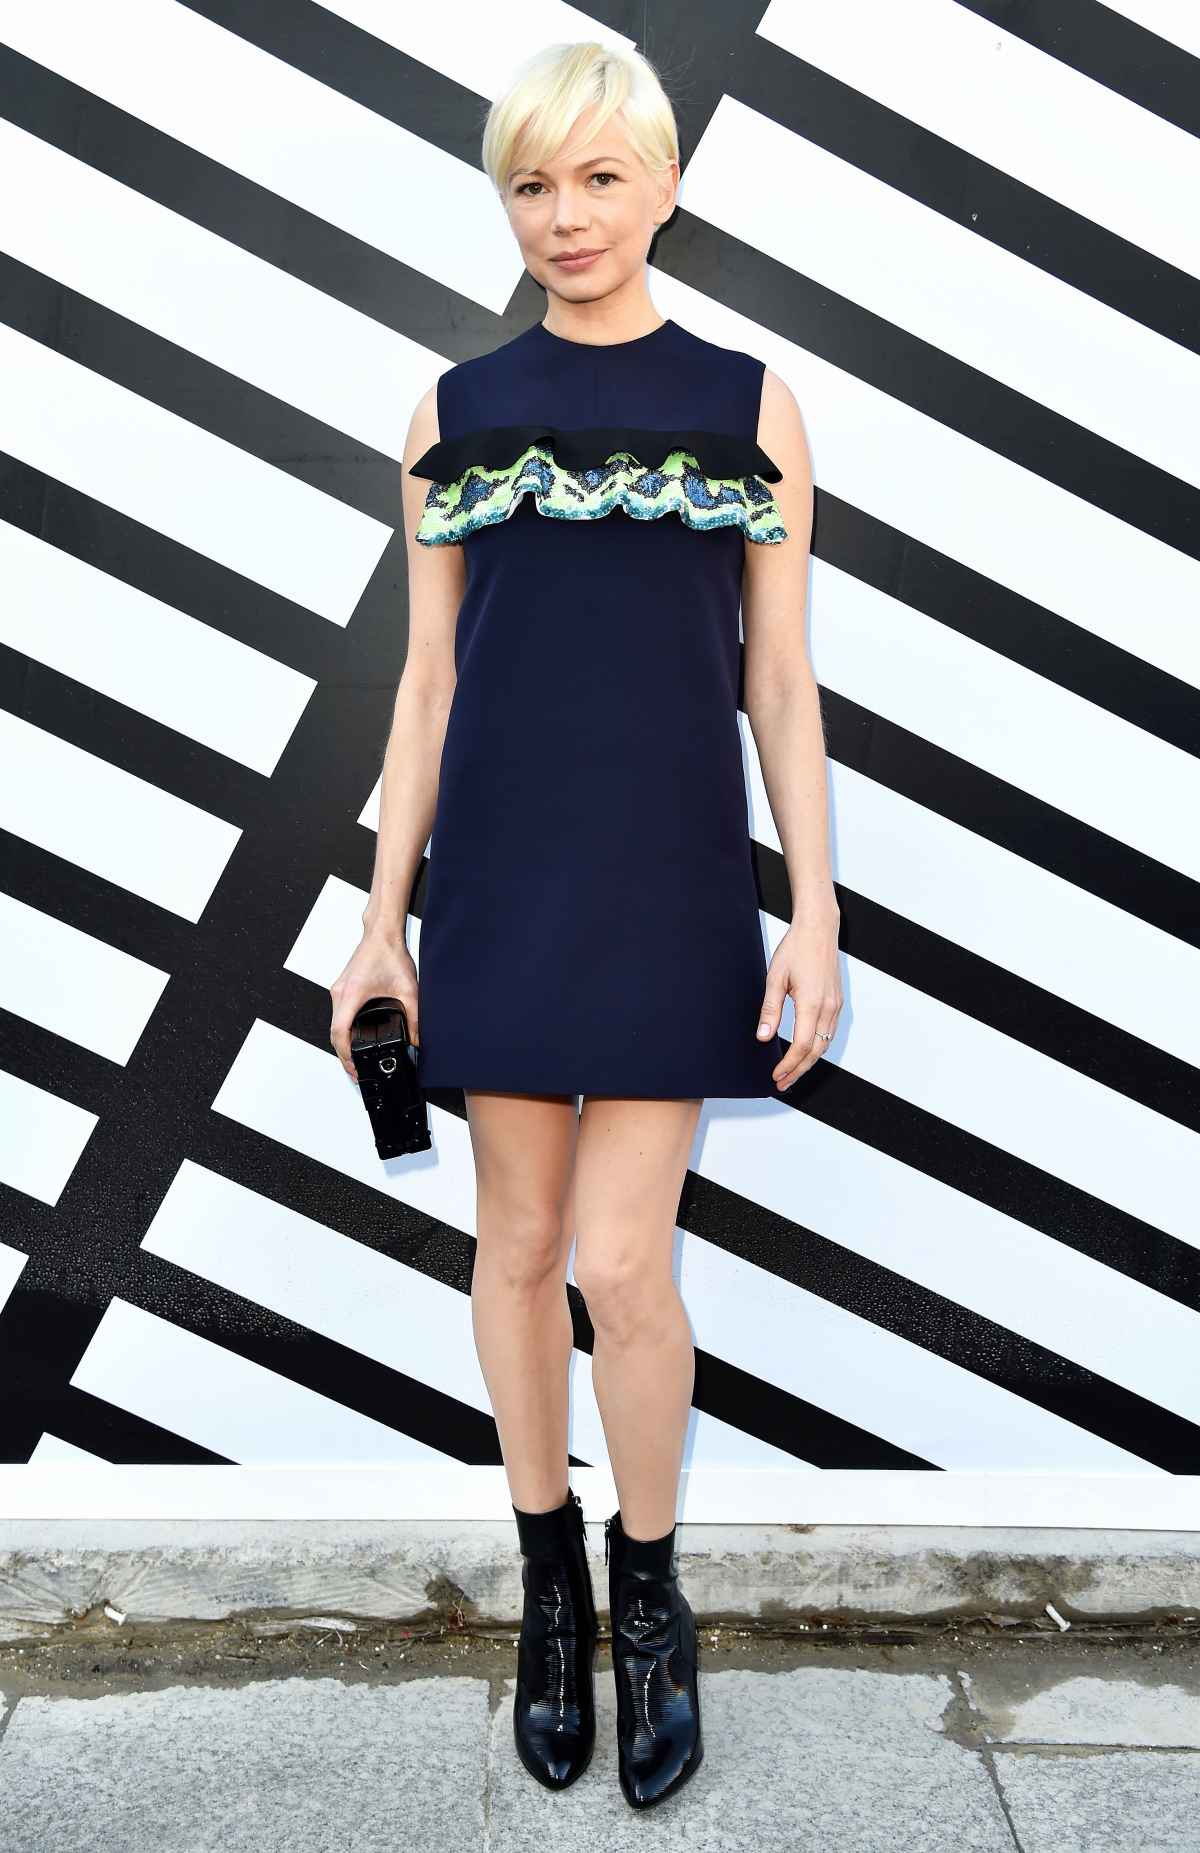 Karlie Kloss in Louis Vuitton – At 2015 MTV Video Music Awards